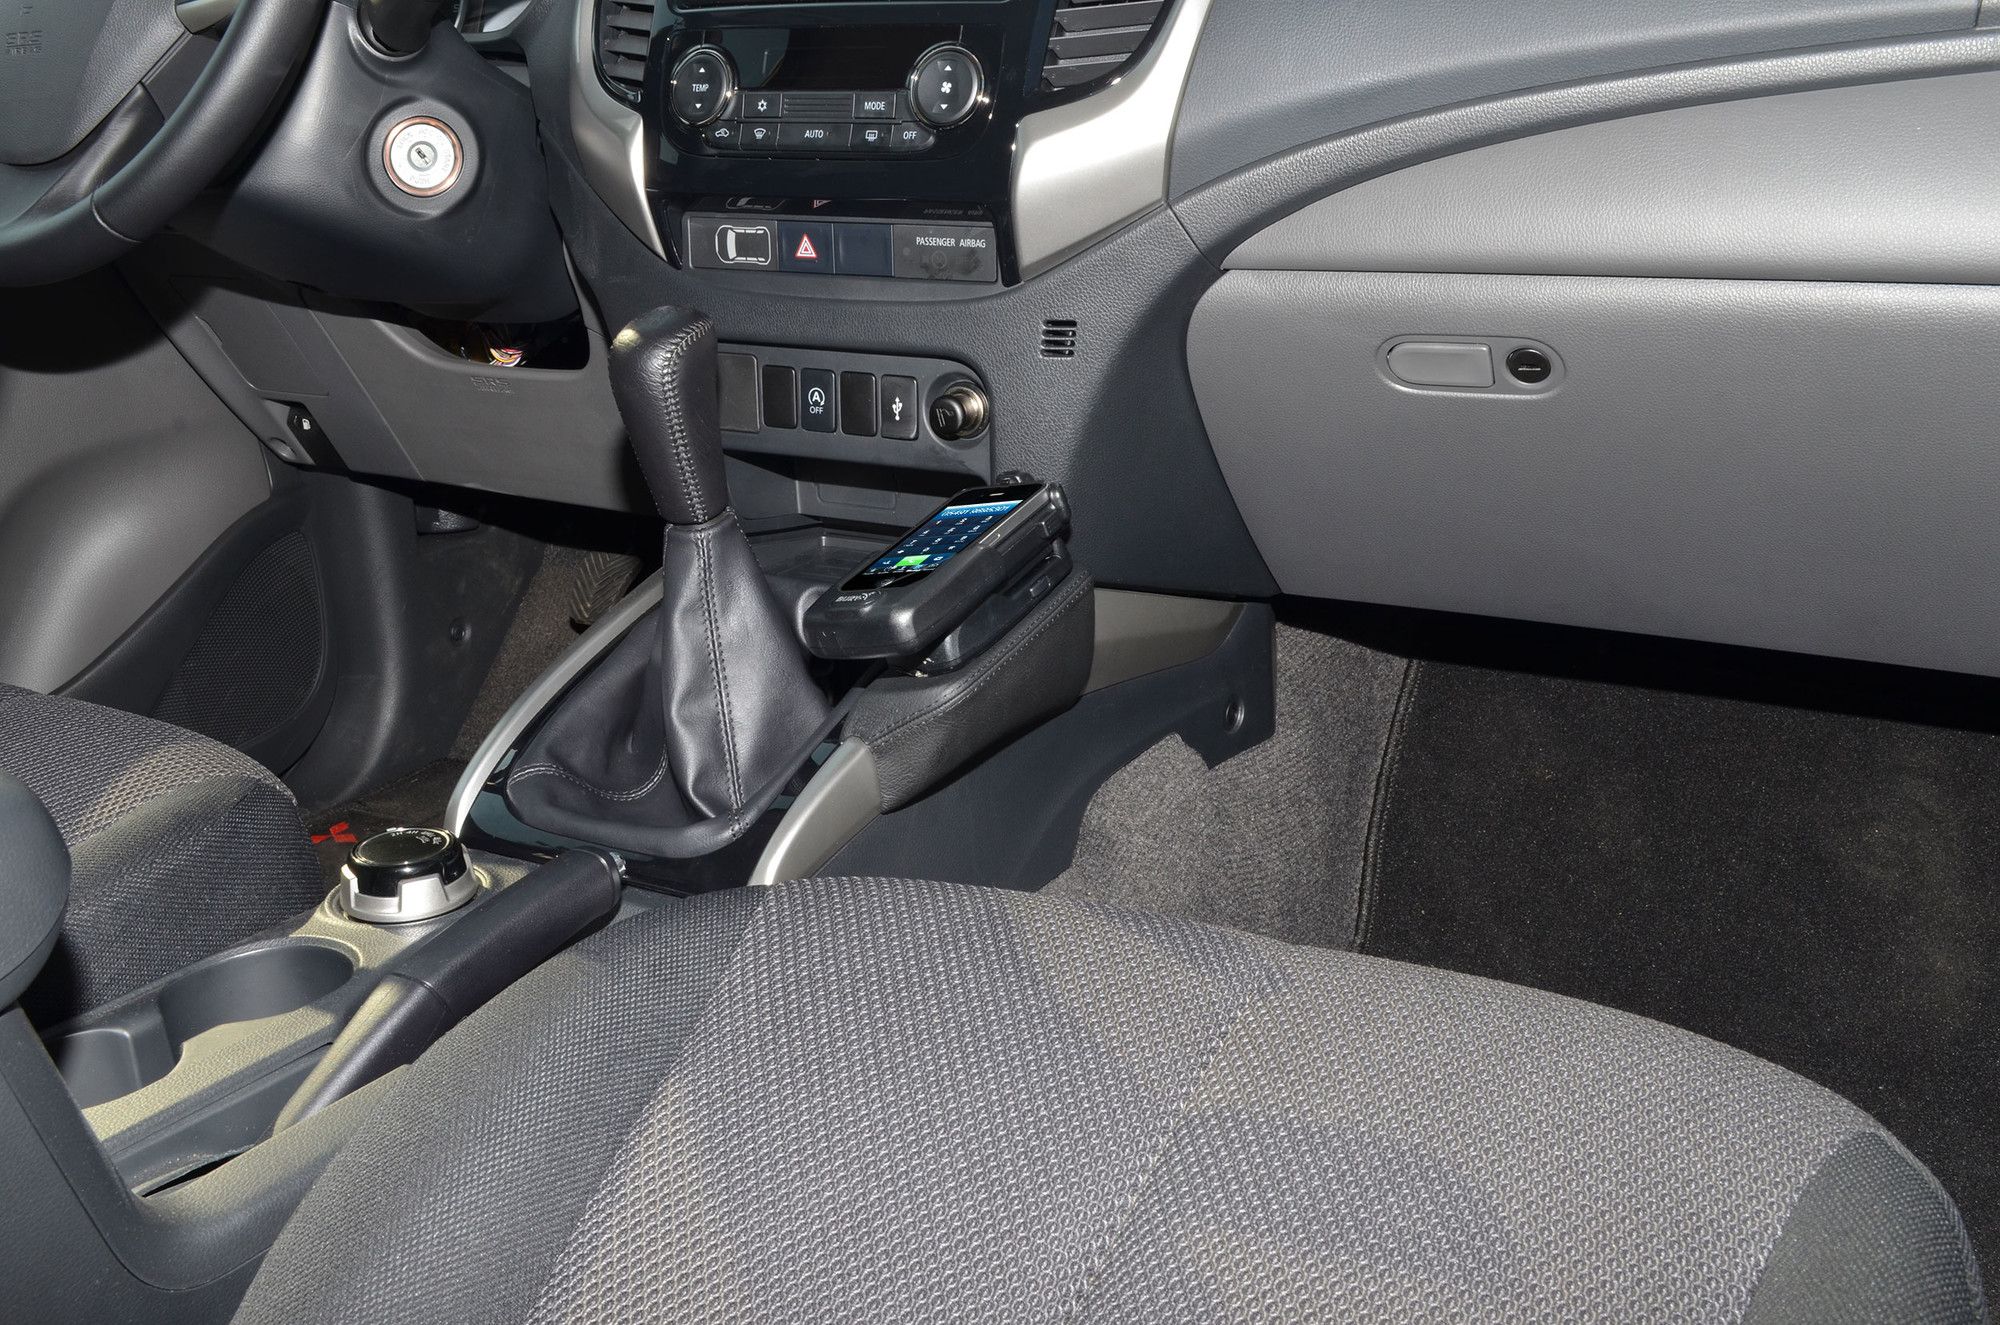 Kuda console Mits.L200 10/2015-/ Fiat Fullback 2016- Zwart